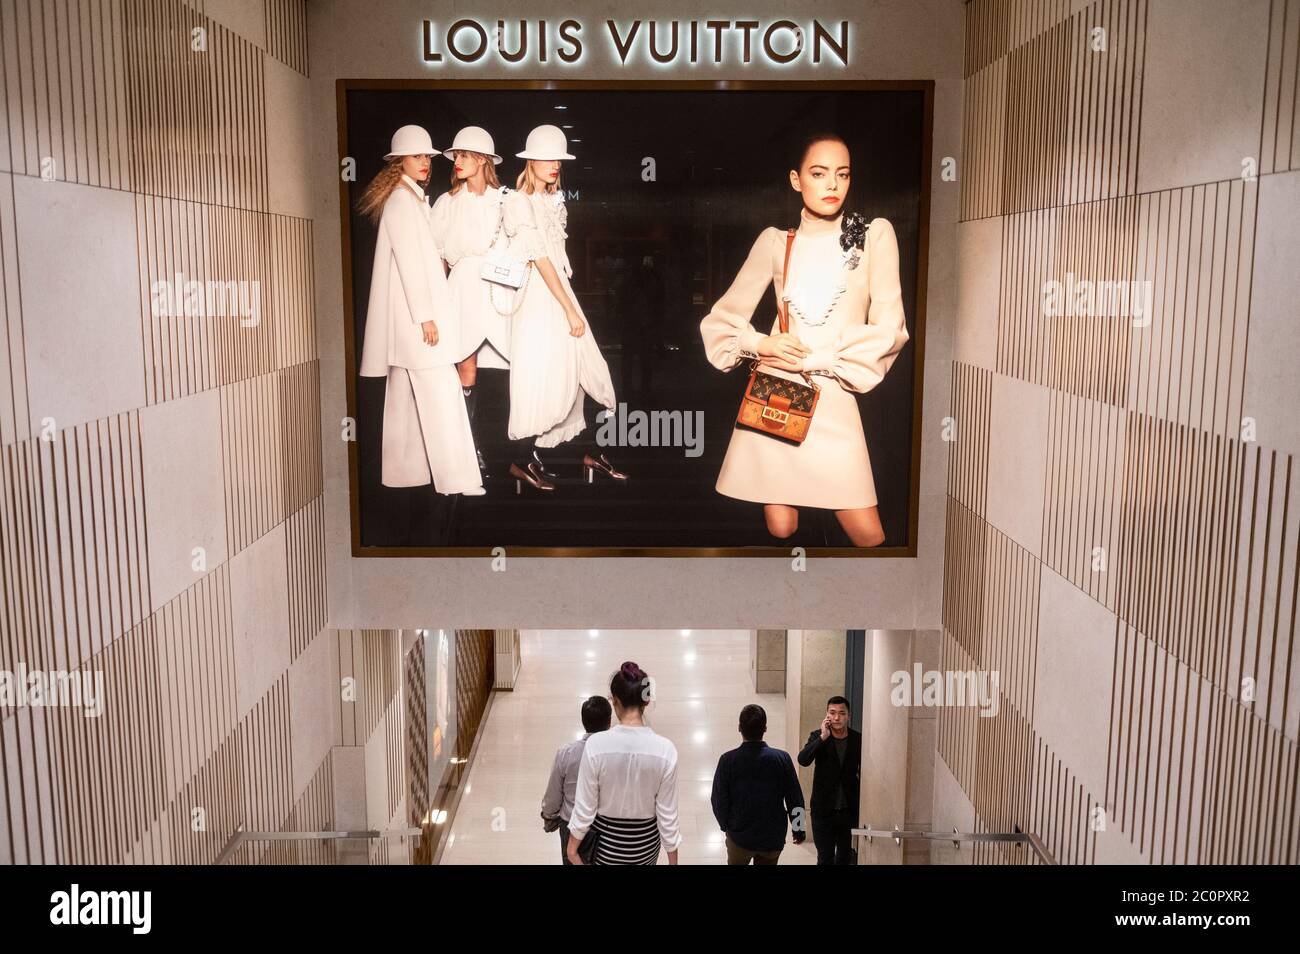 Louis Vuitton Plaza Indonesia